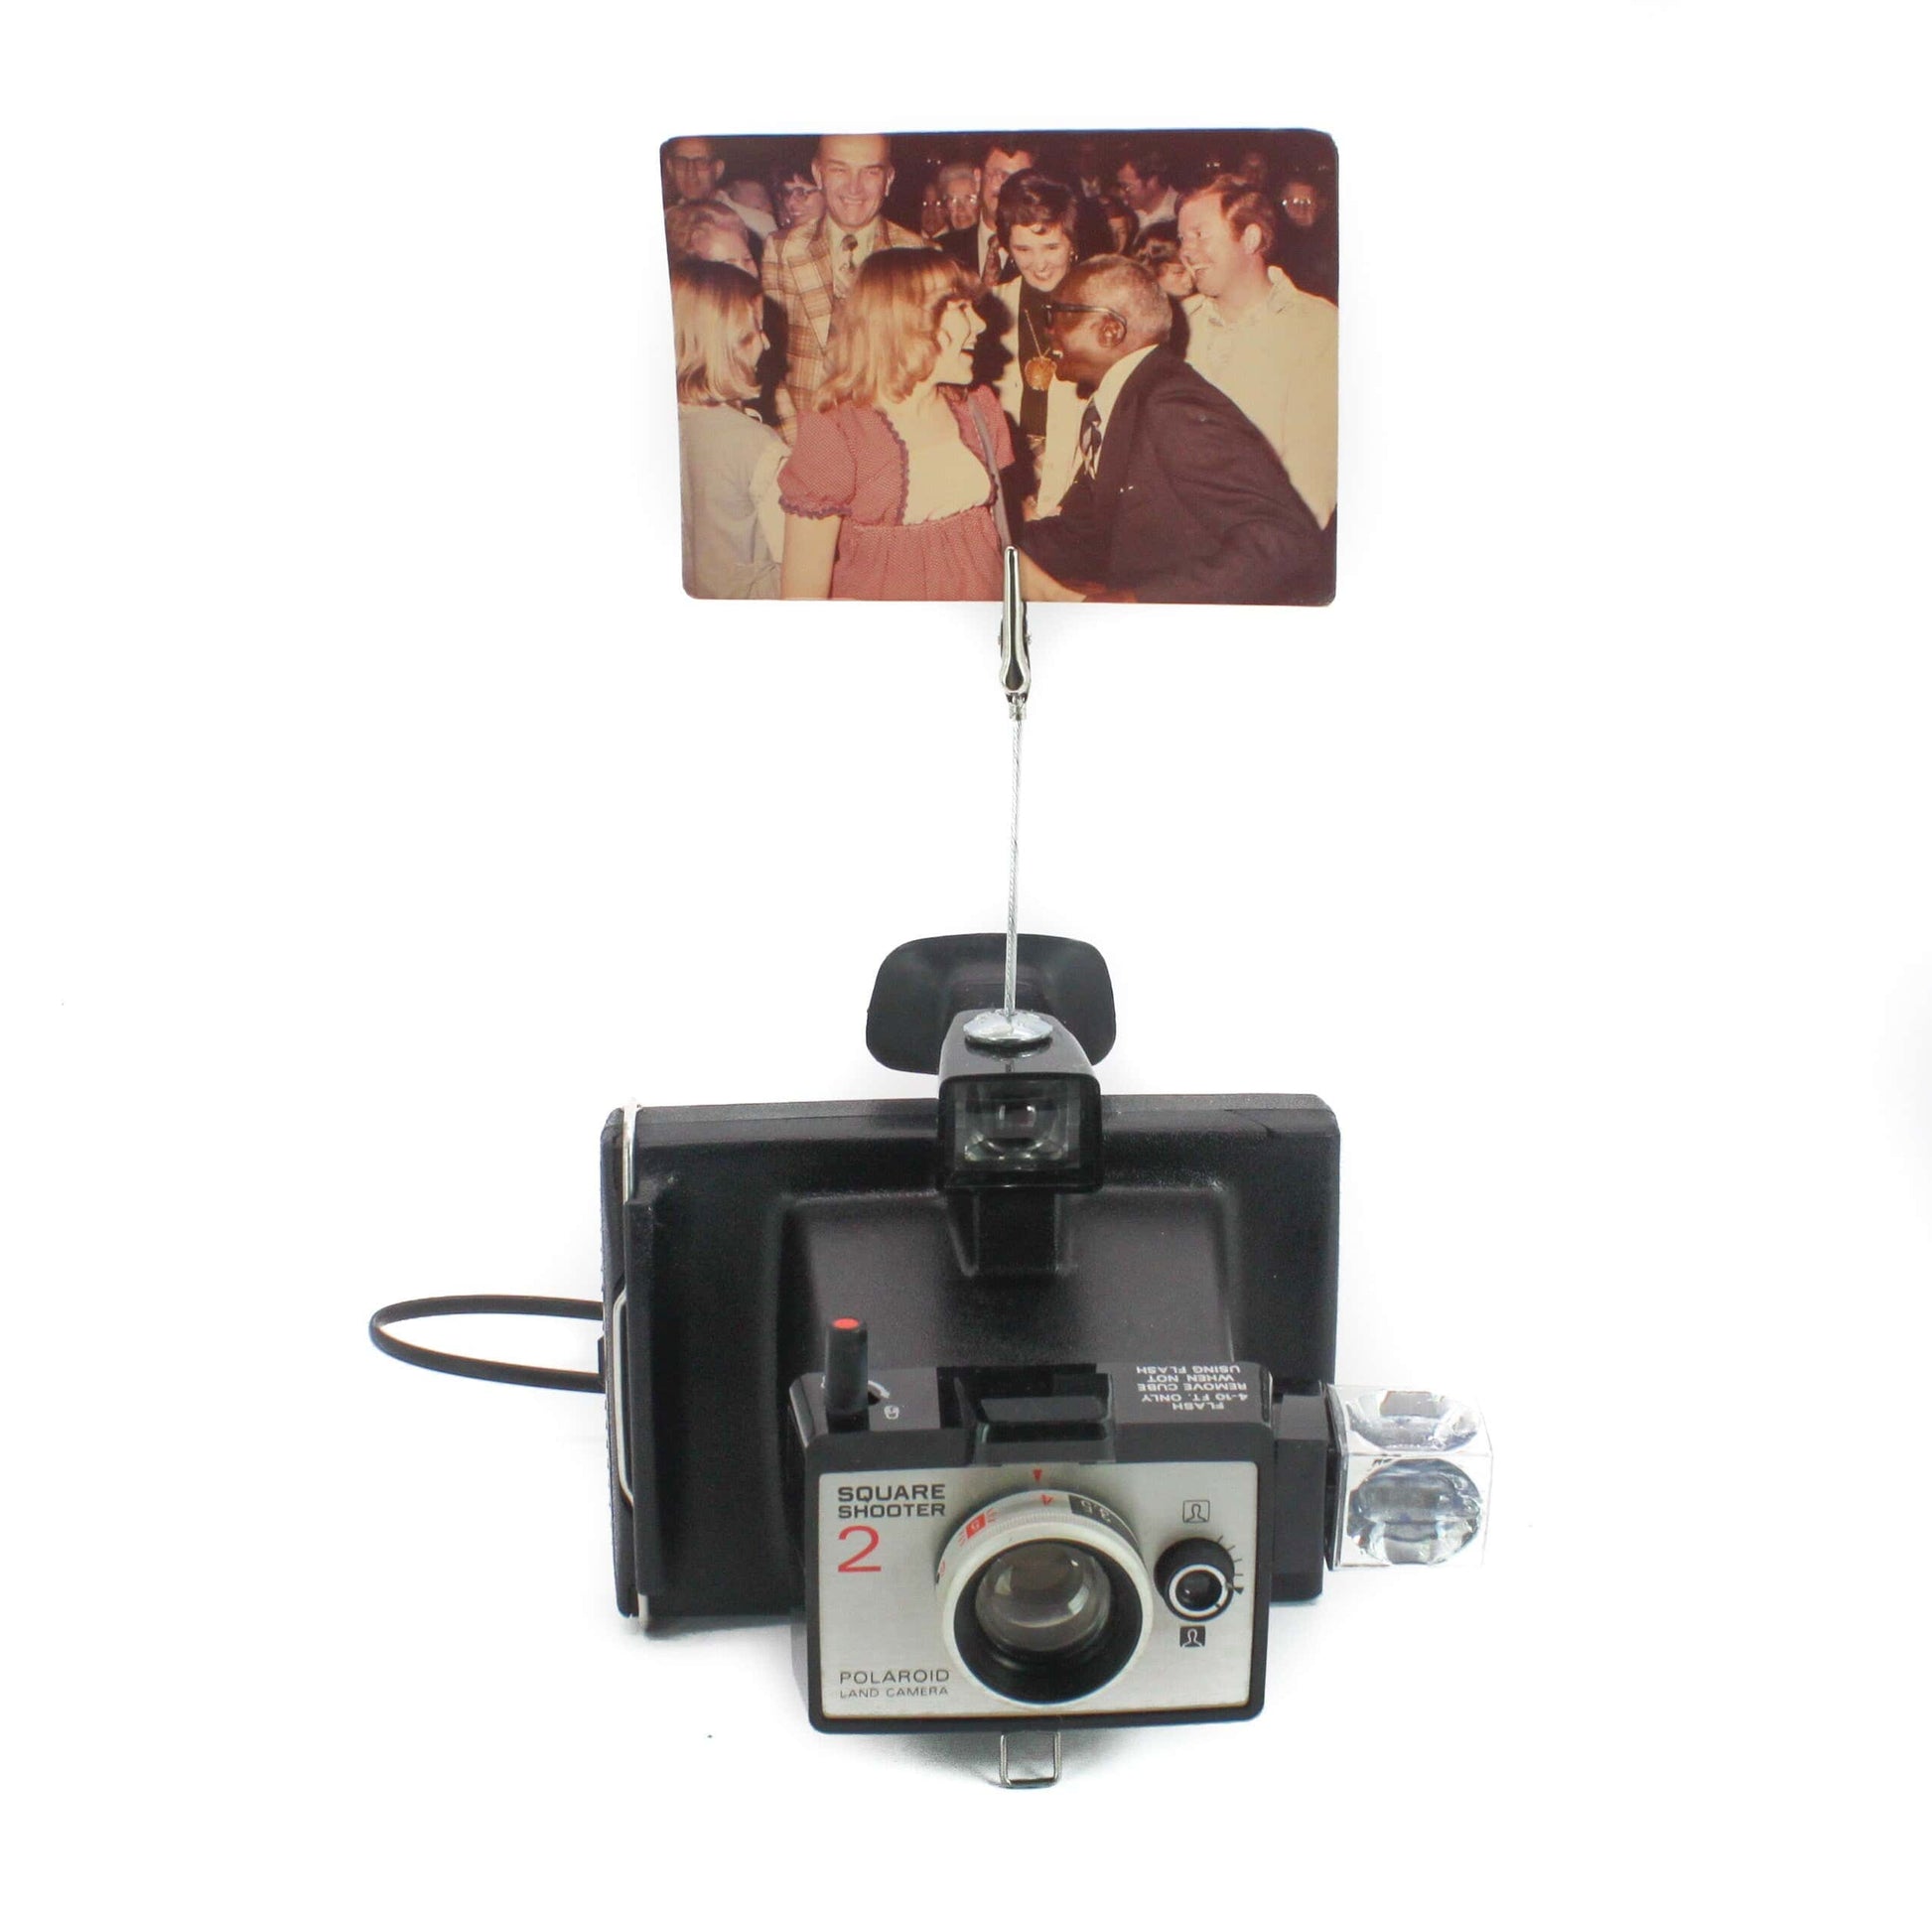 LightAndTimeArt Photo Holder Vintage Camera Photo Holder - Square Shooter 2 CAMERA -  travel-themed wedding décor